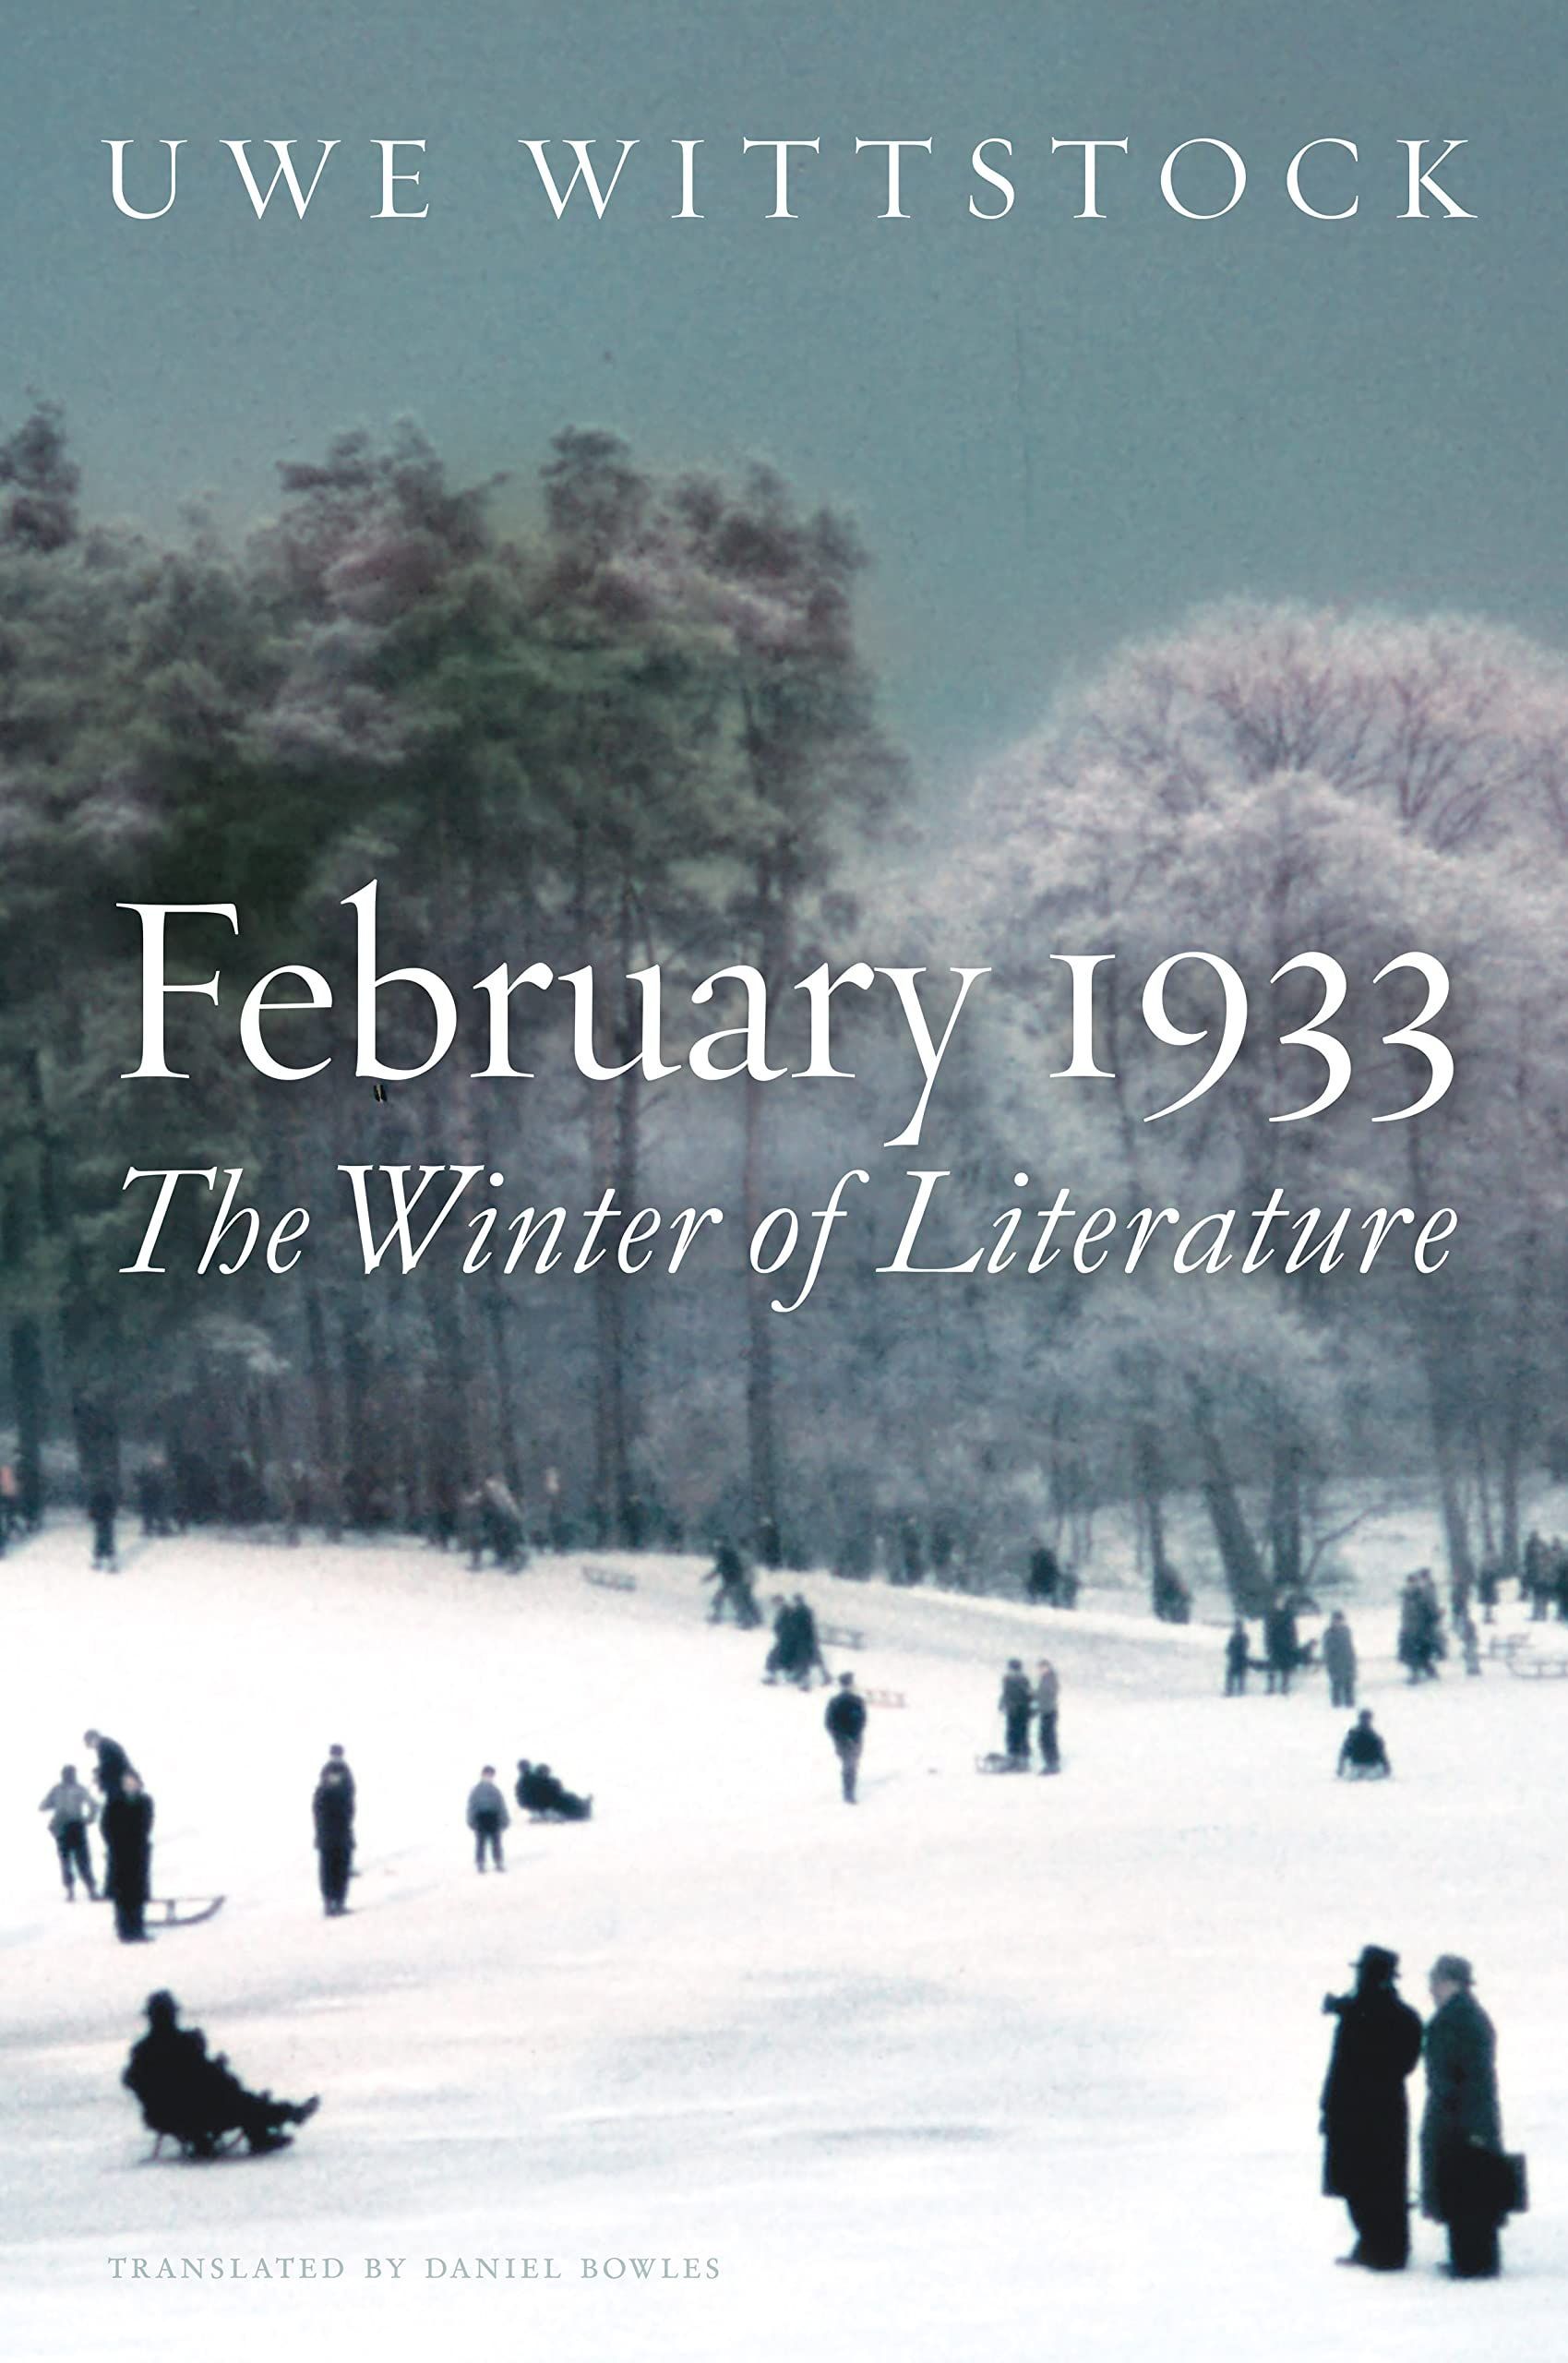 Thin Ice: On Uwe Wittstock’s “February 1933”